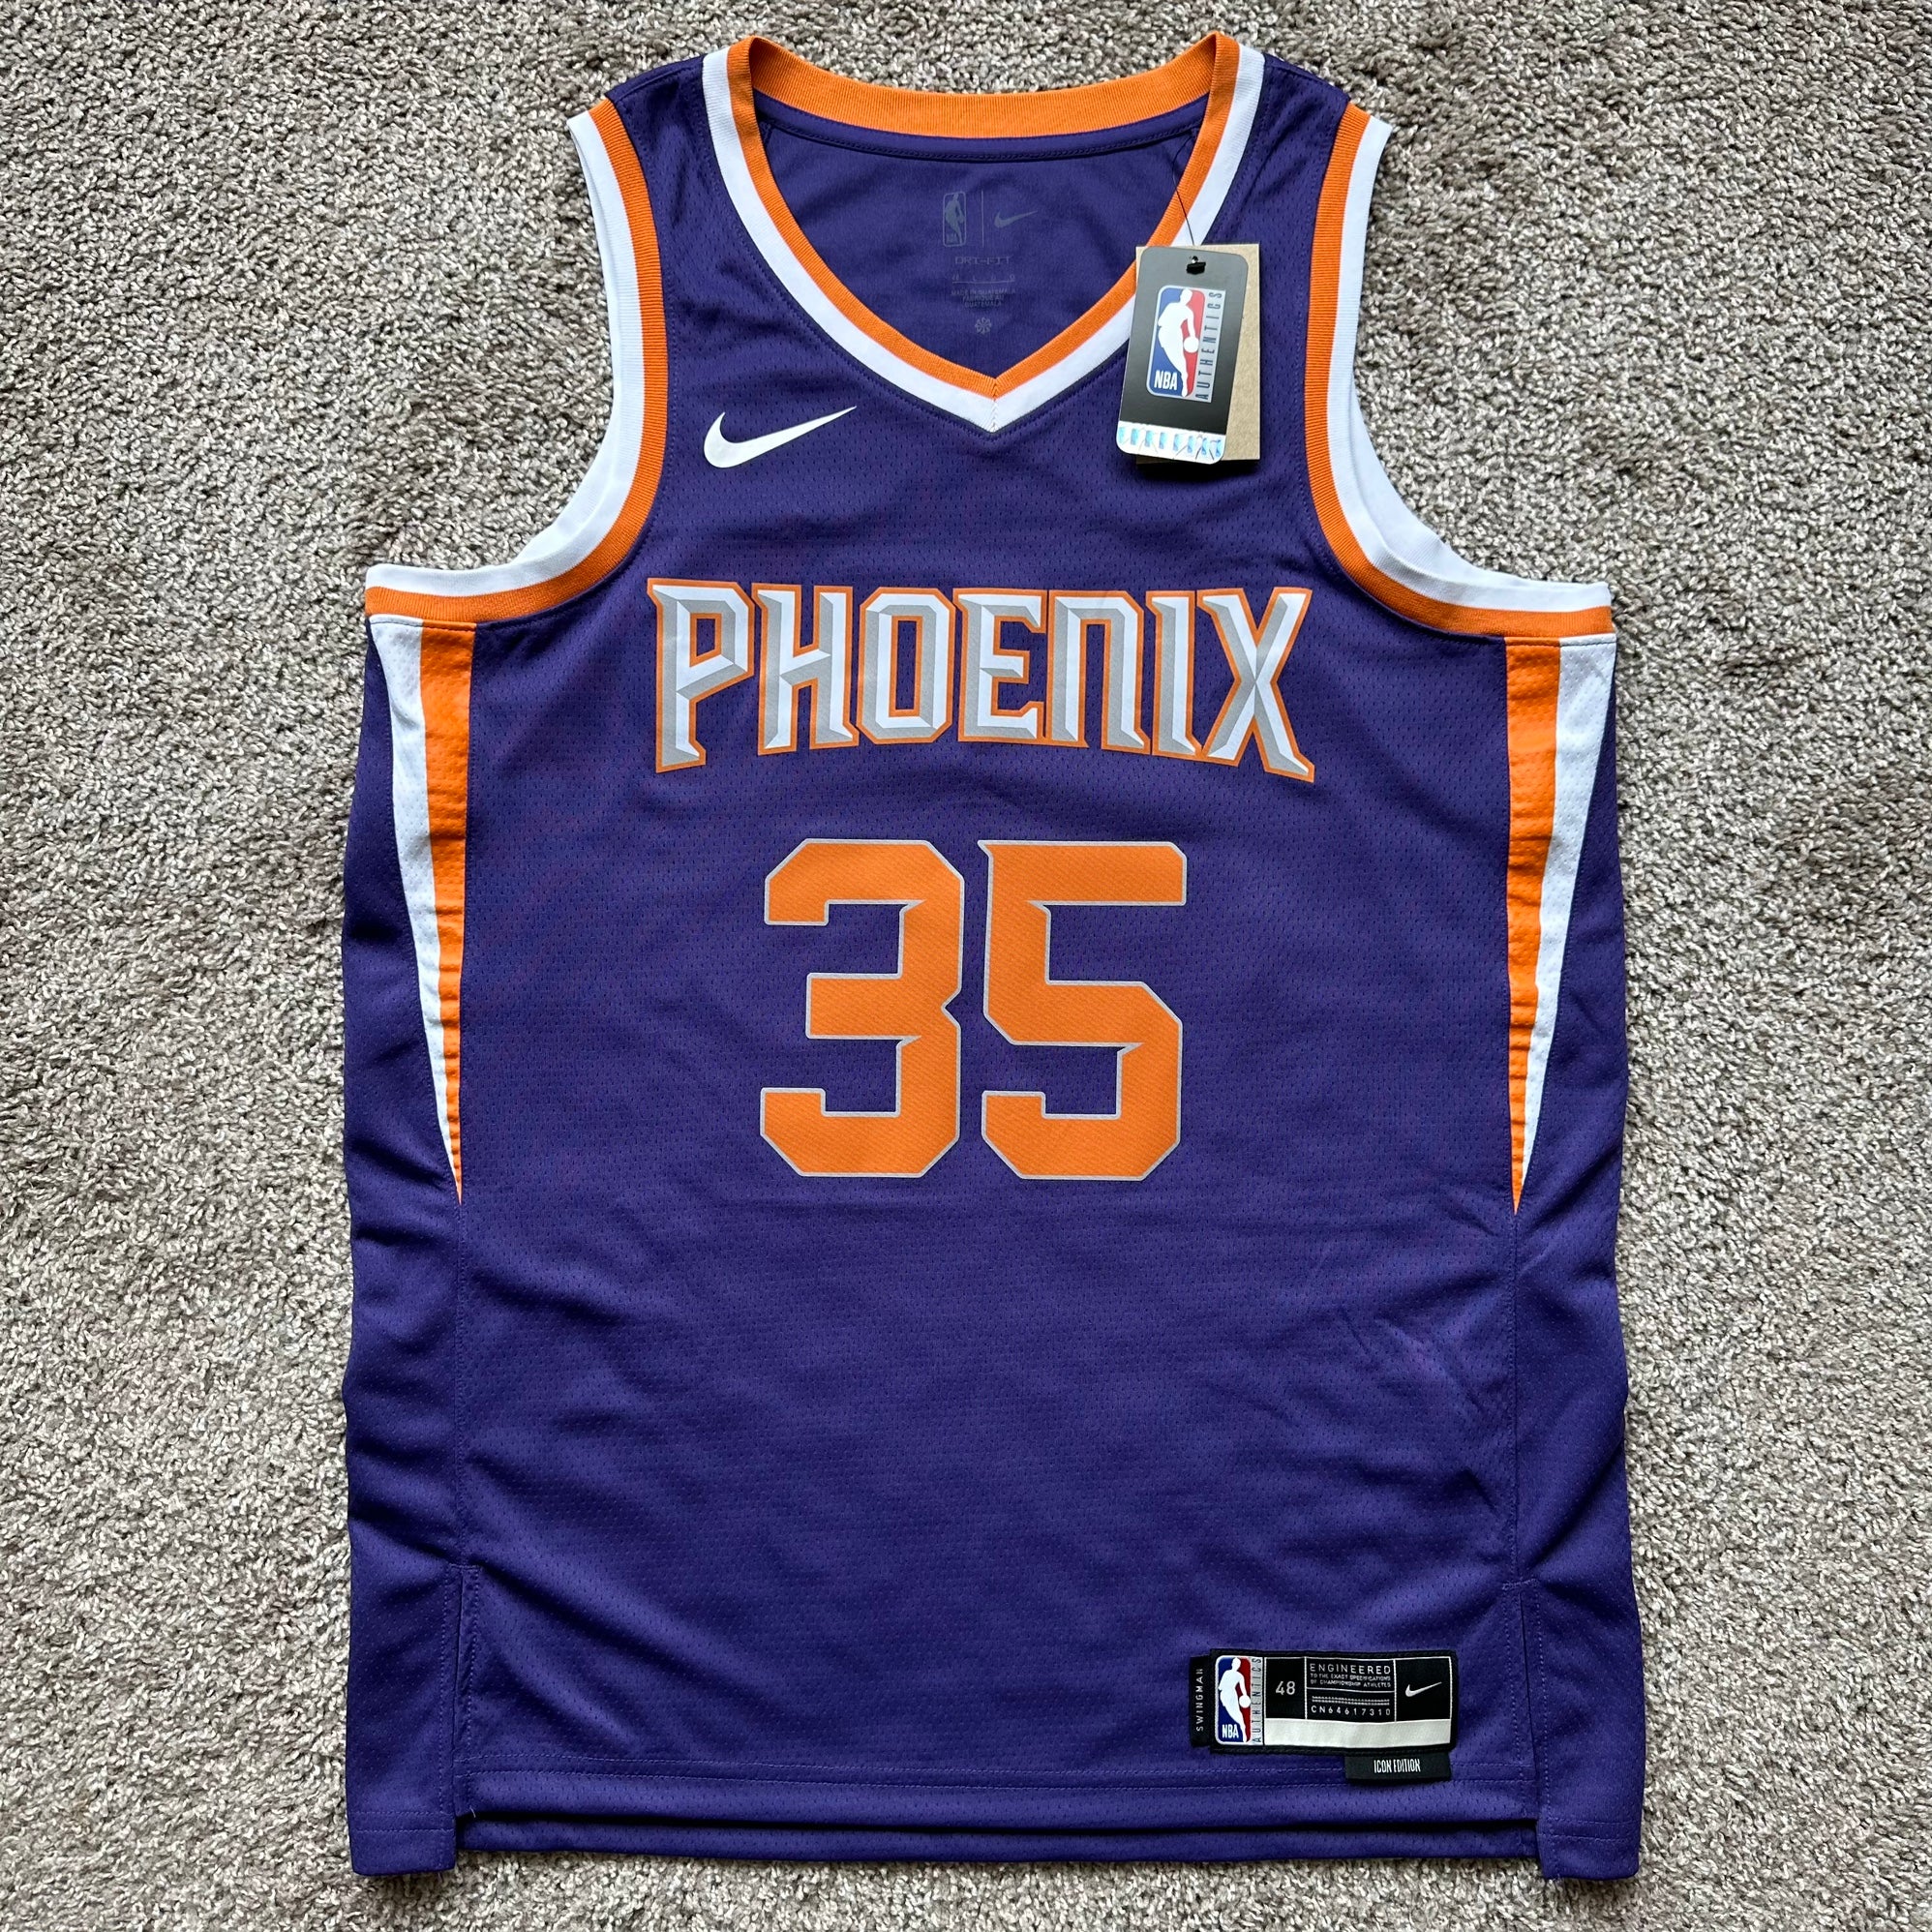 NBA Phoenix Suns ADIDAS Reversible Basketball Practice Jersey